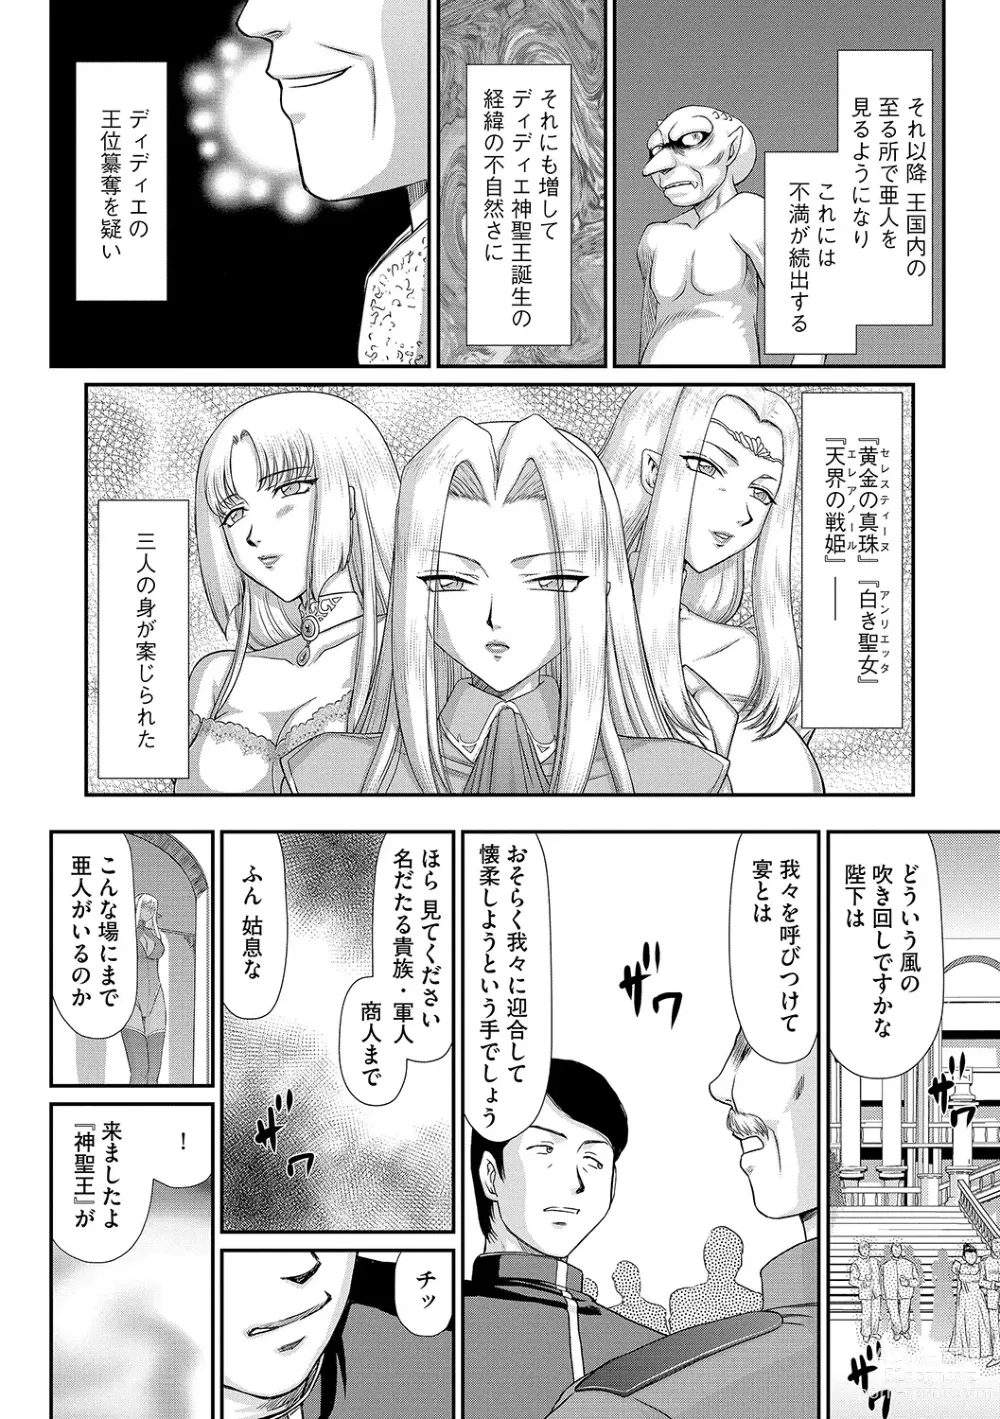 Page 180 of manga Hakudaku Senki Eleanor